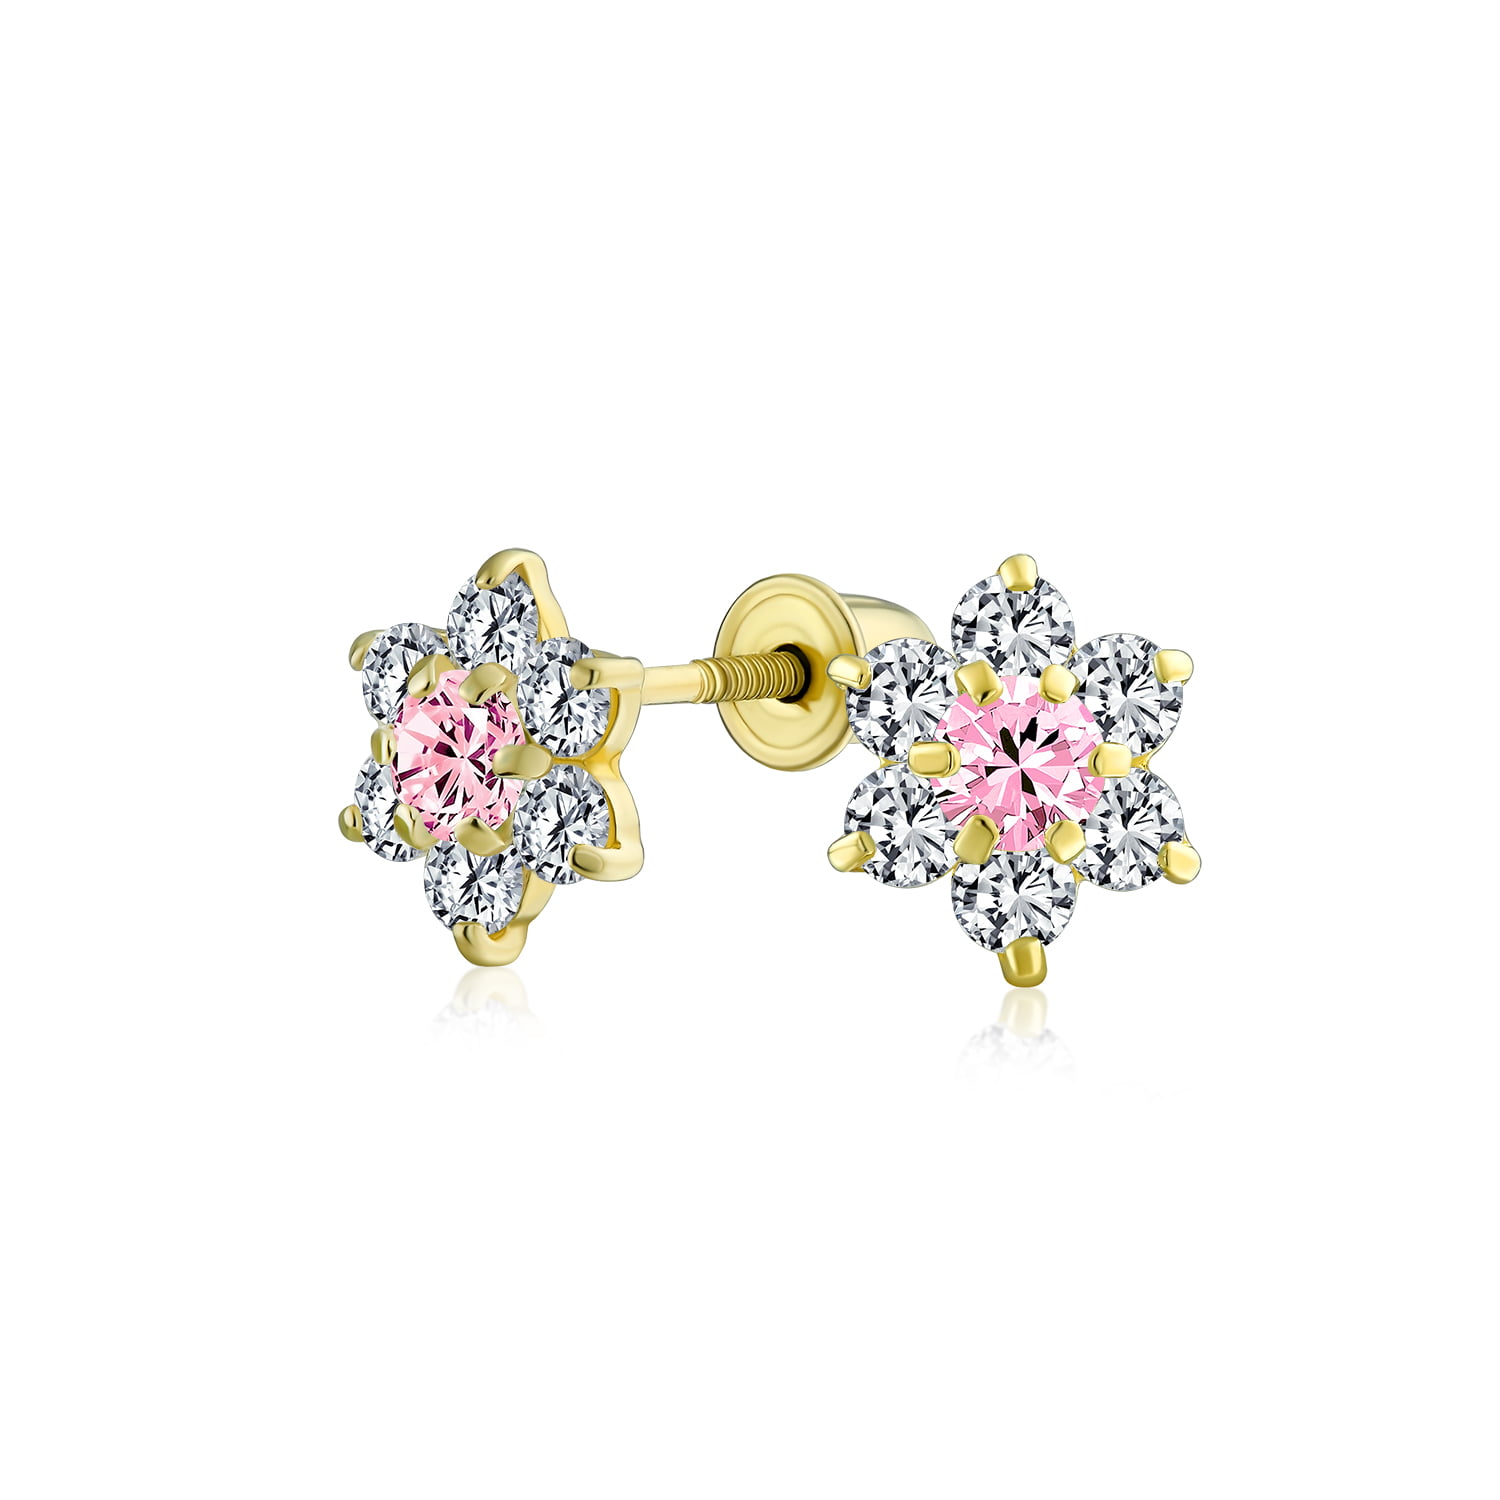 10k Yellow Gold 4mm Princess Cut Simulated Light Pink Tourmaline Stud Earrings